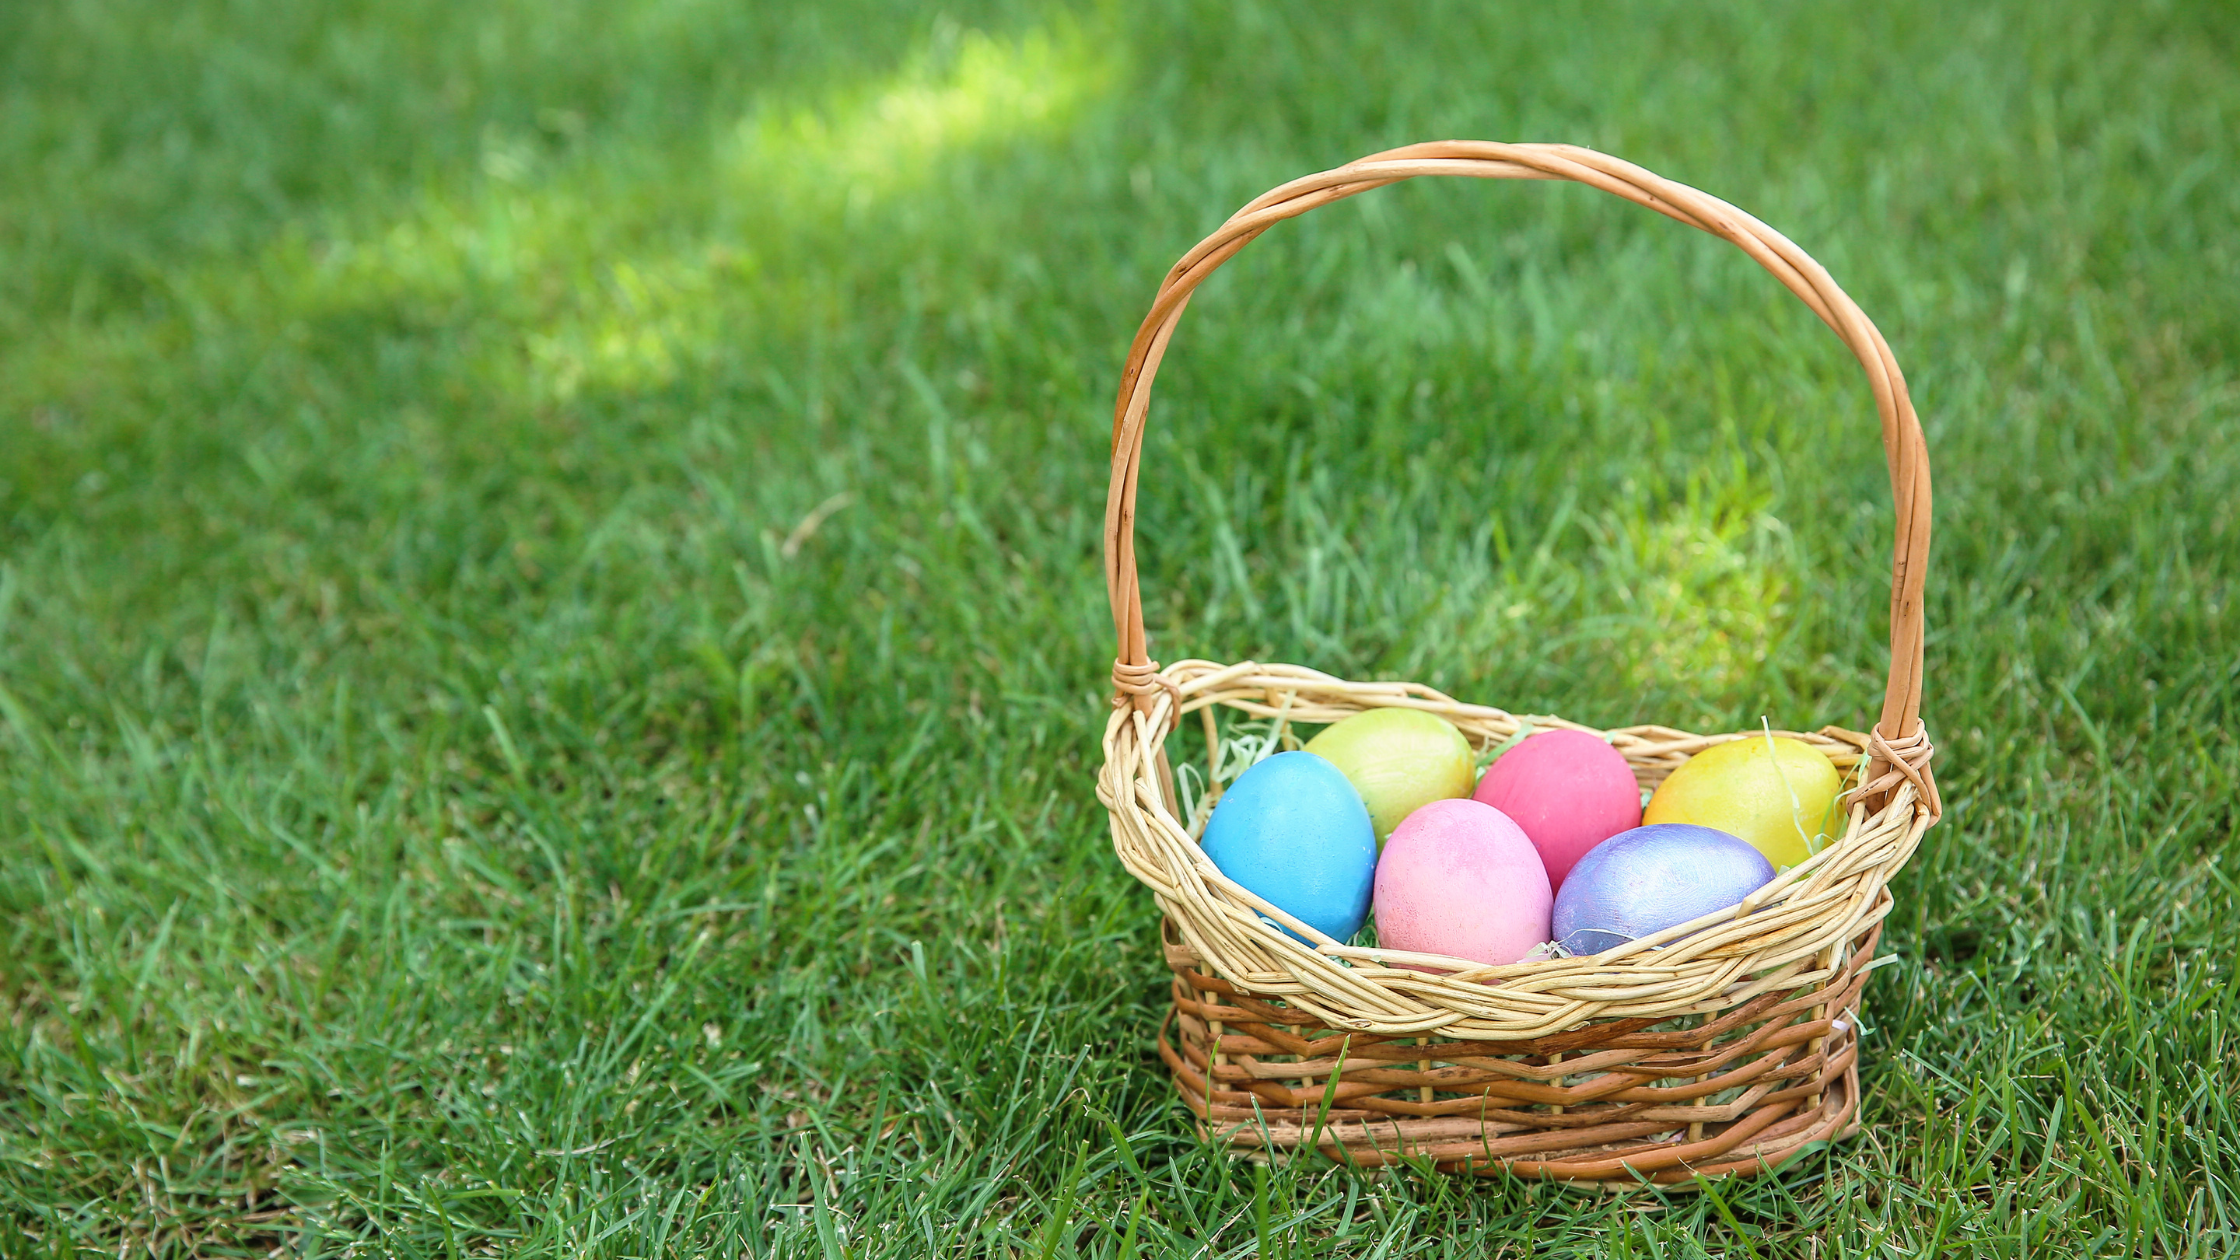 Outdoor Themed Easter Egg Basket